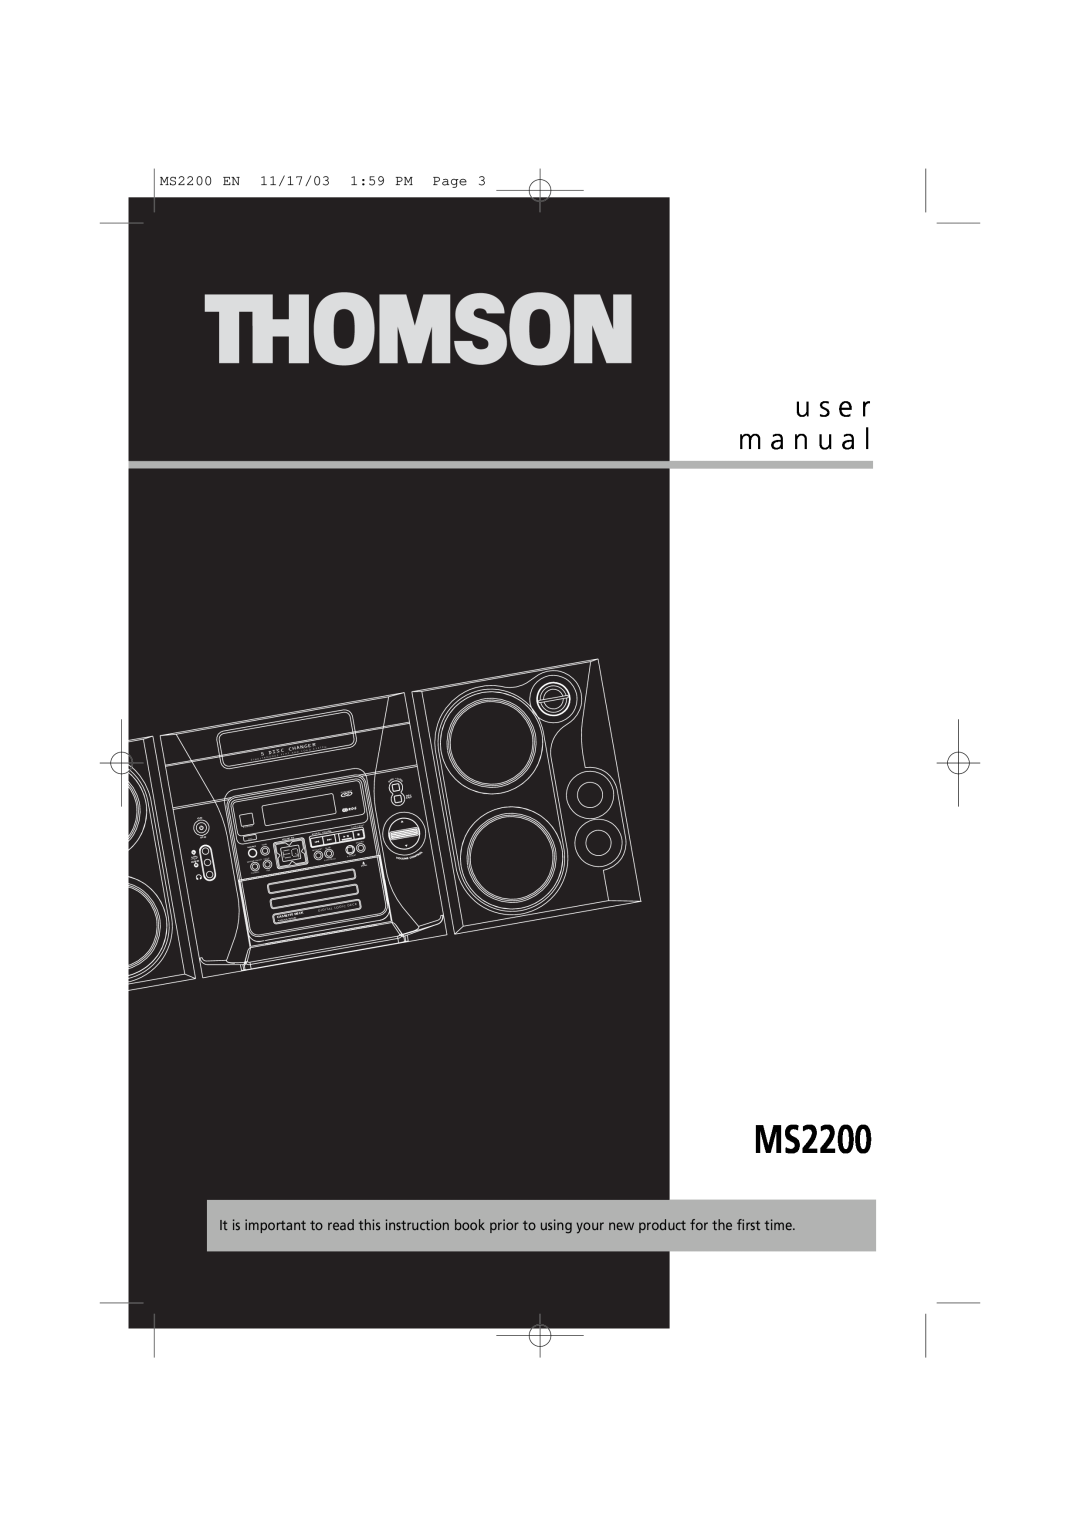 Technicolor - Thomson u s e r m a n u a l, MS2200 EN 11/17/03 1 59 PM Page, L Log, Ic Dec, Digita, Cassette Deck, N Clo 